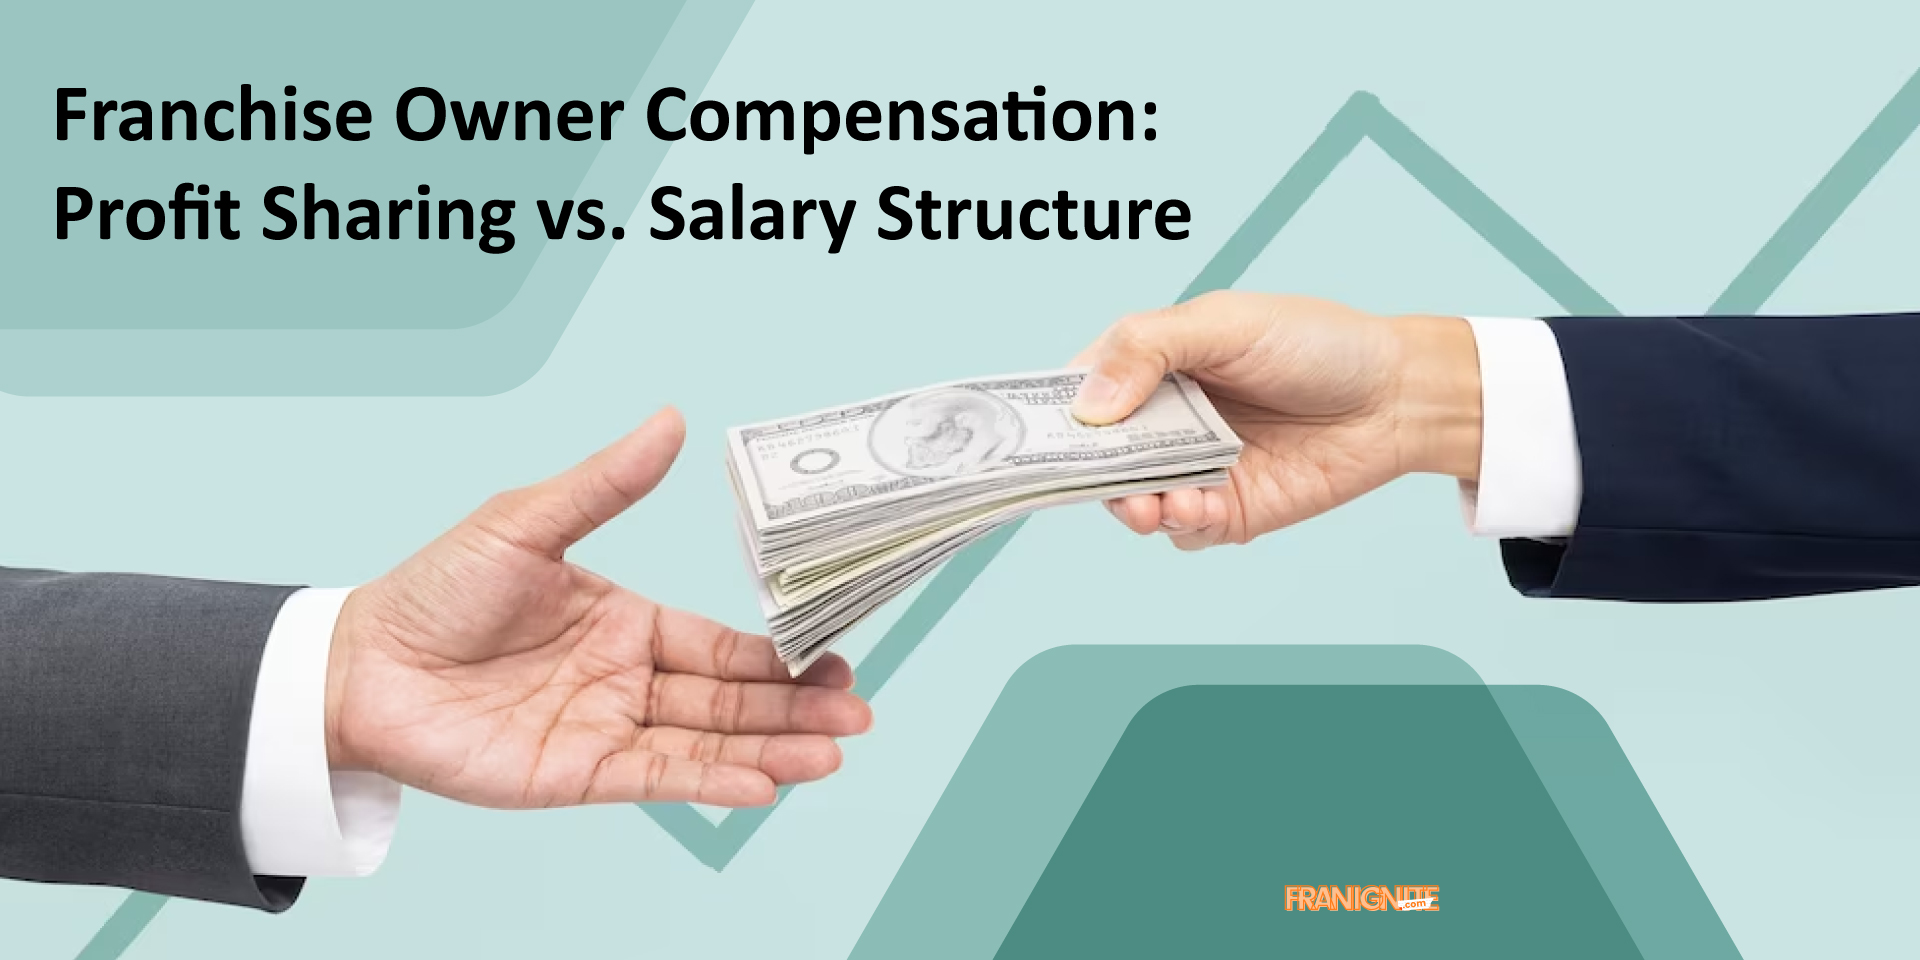 Franchise Owner Compensation: Profit Sharing vs. Salary Structure